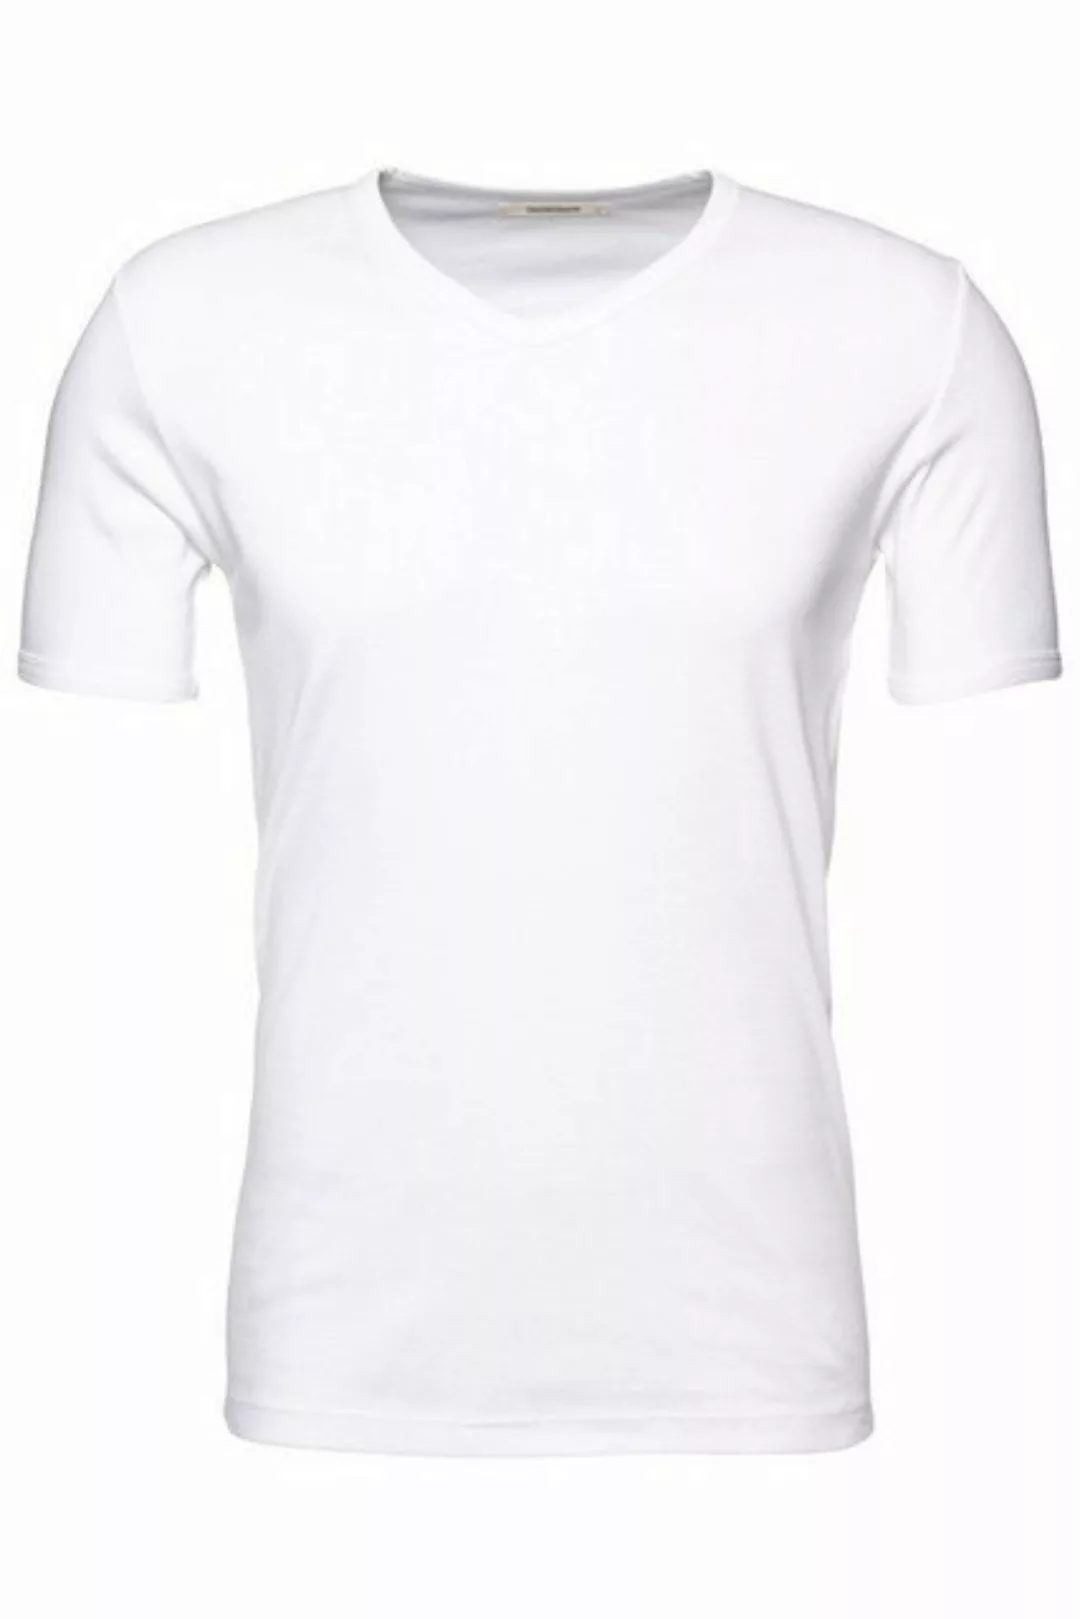 wunderwerk V-Shirt V-neck rib-tee 2-pack male günstig online kaufen